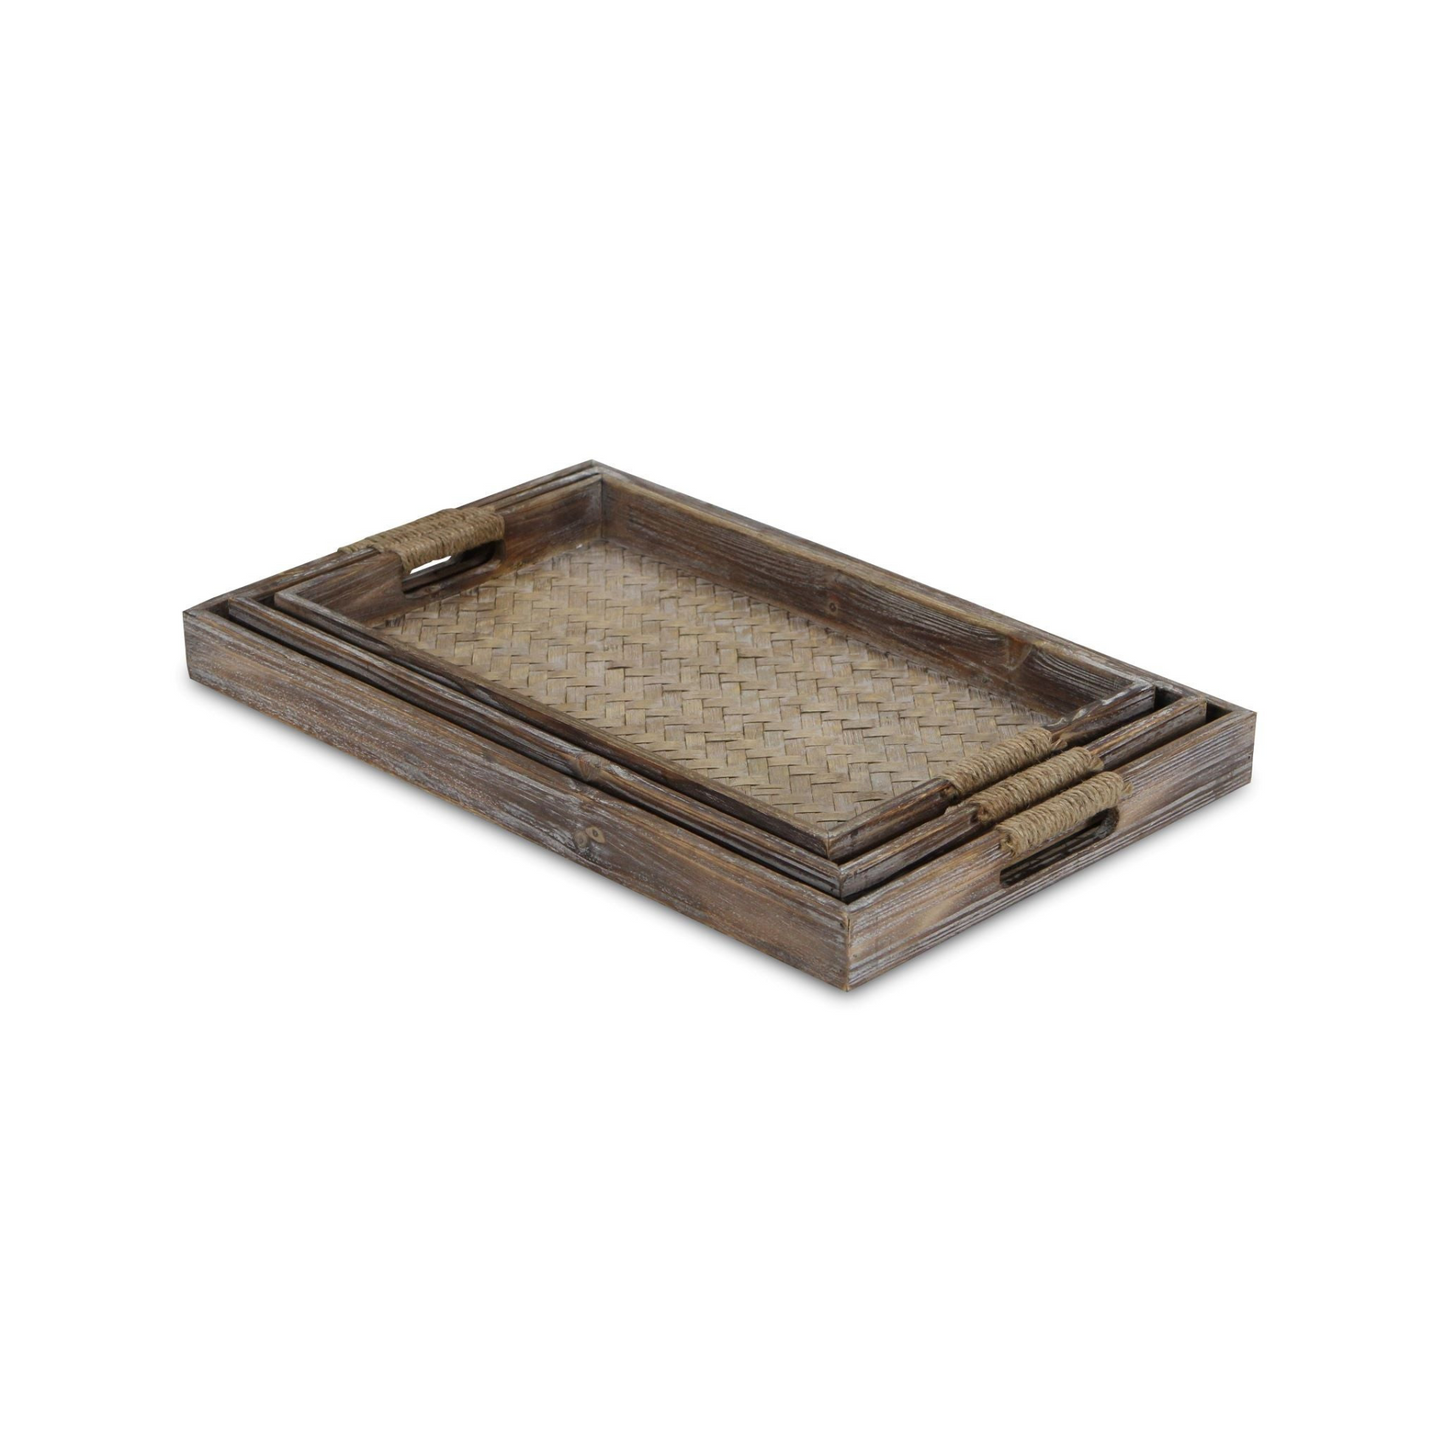 Set Of Three 19" Brown Rectangular Wood Handmade Trays With Handles